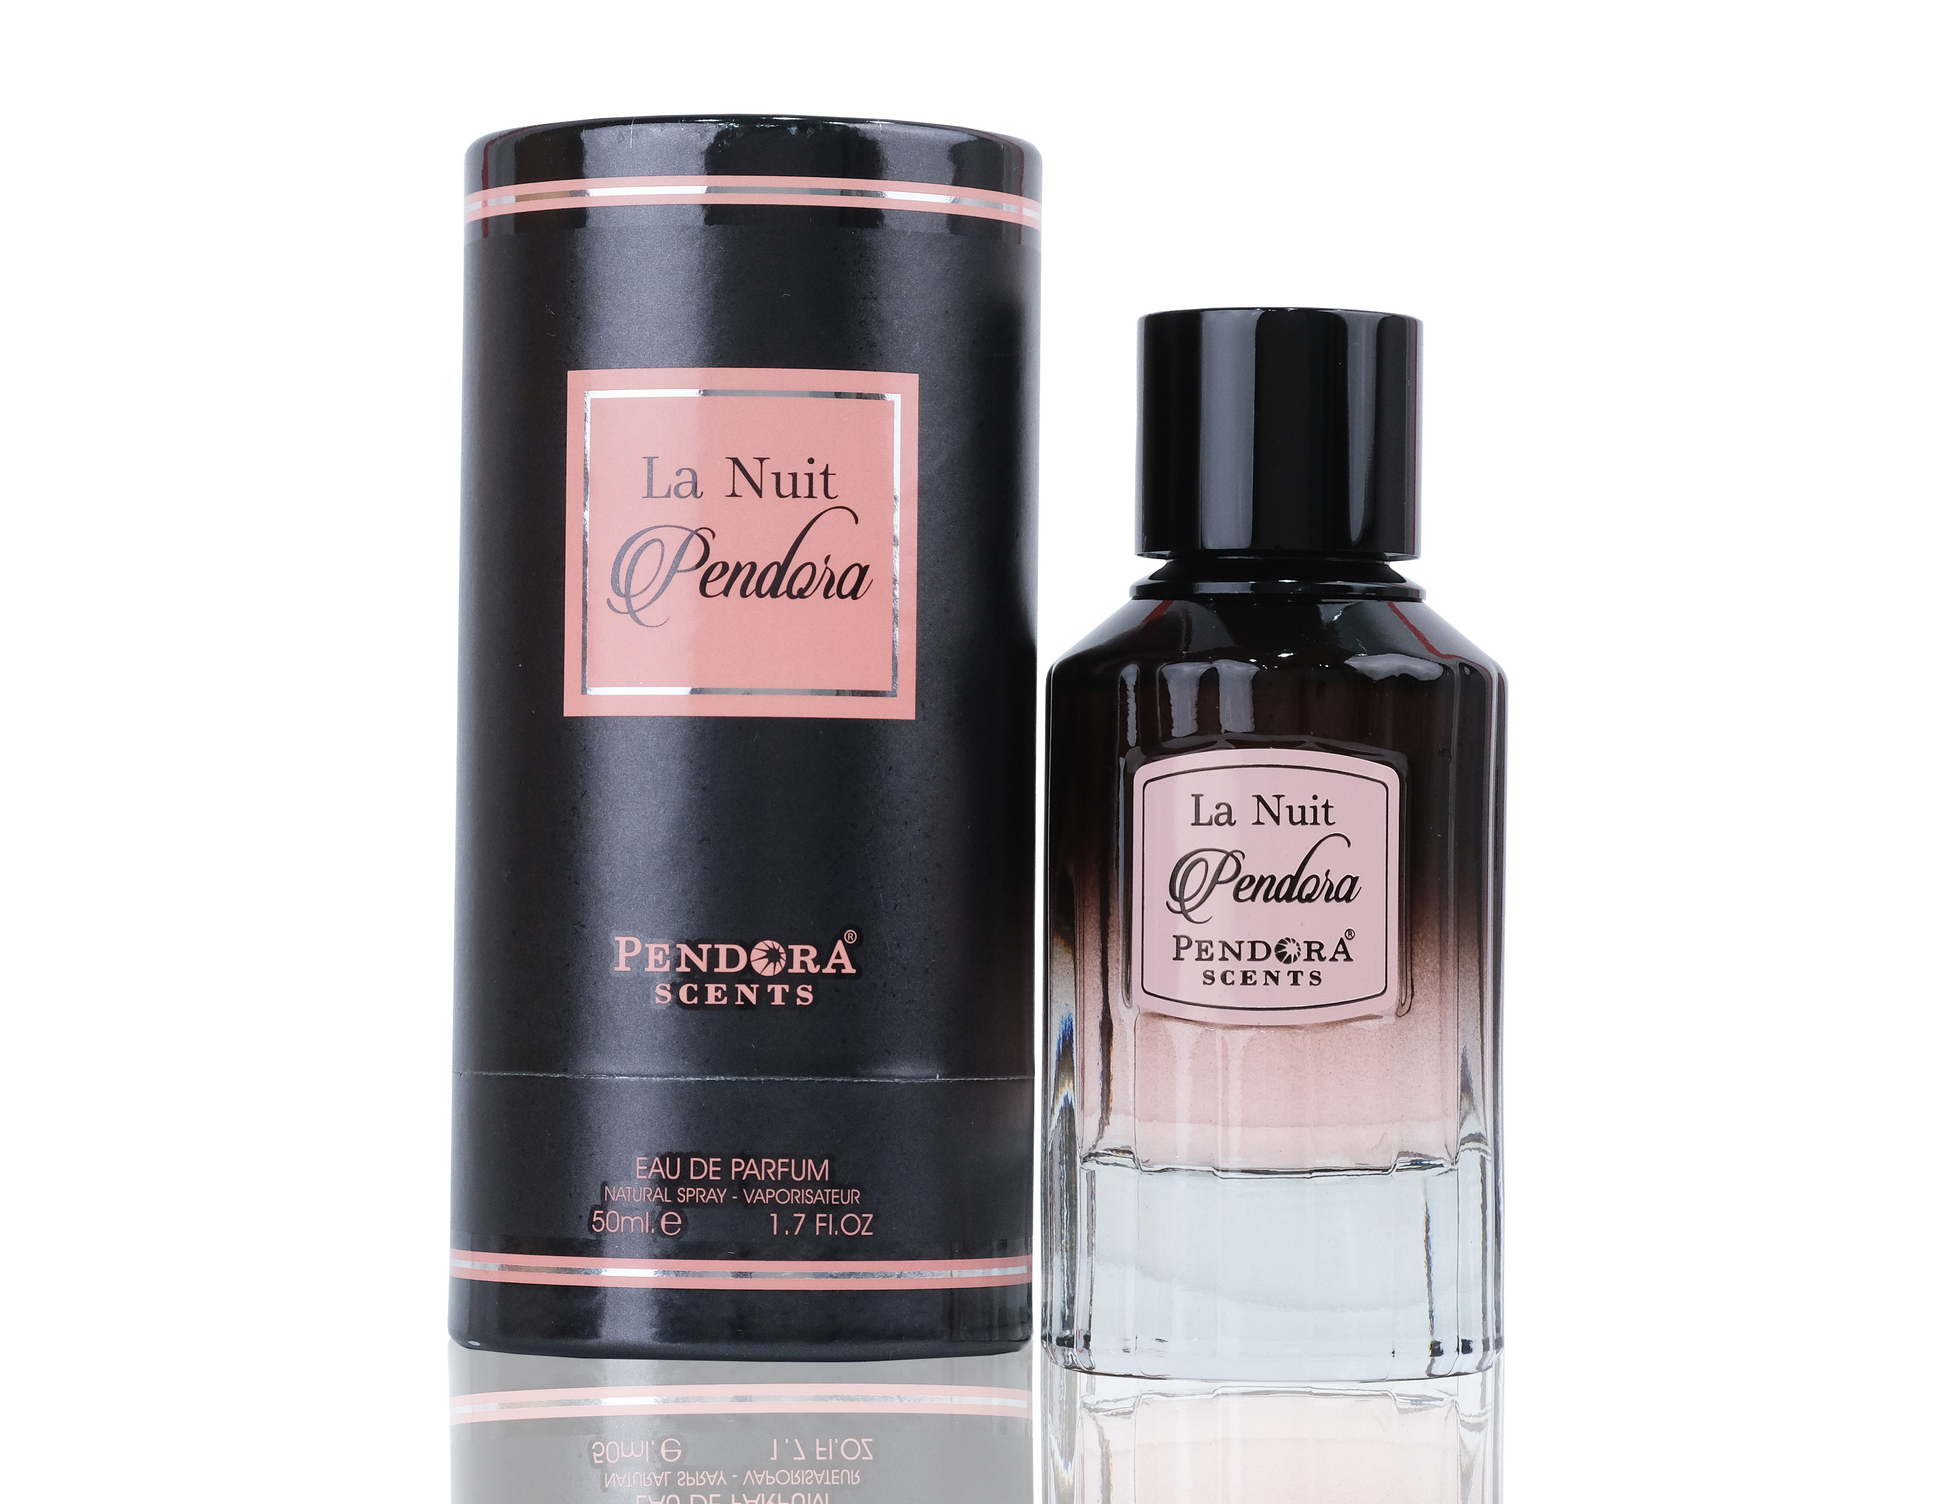 LA NUIT PENDORA - long lasting fragrance for women 